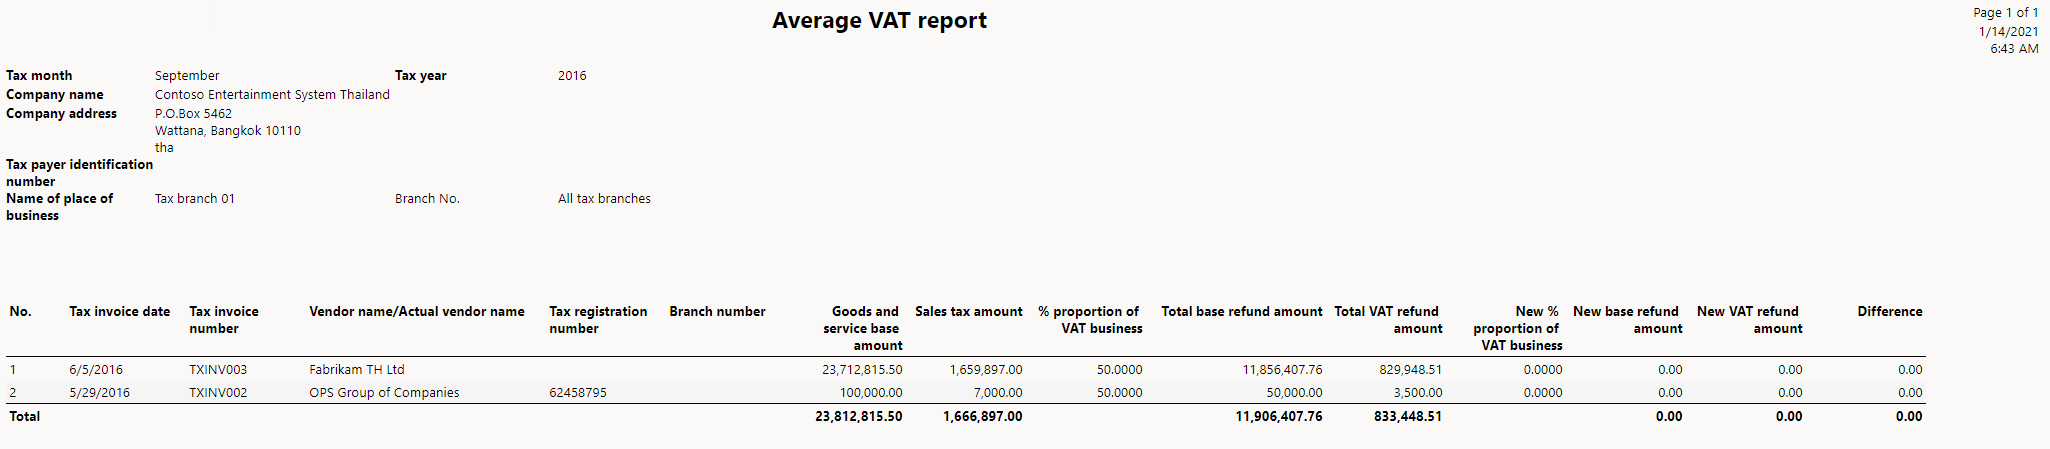 summarized Average VAT report.